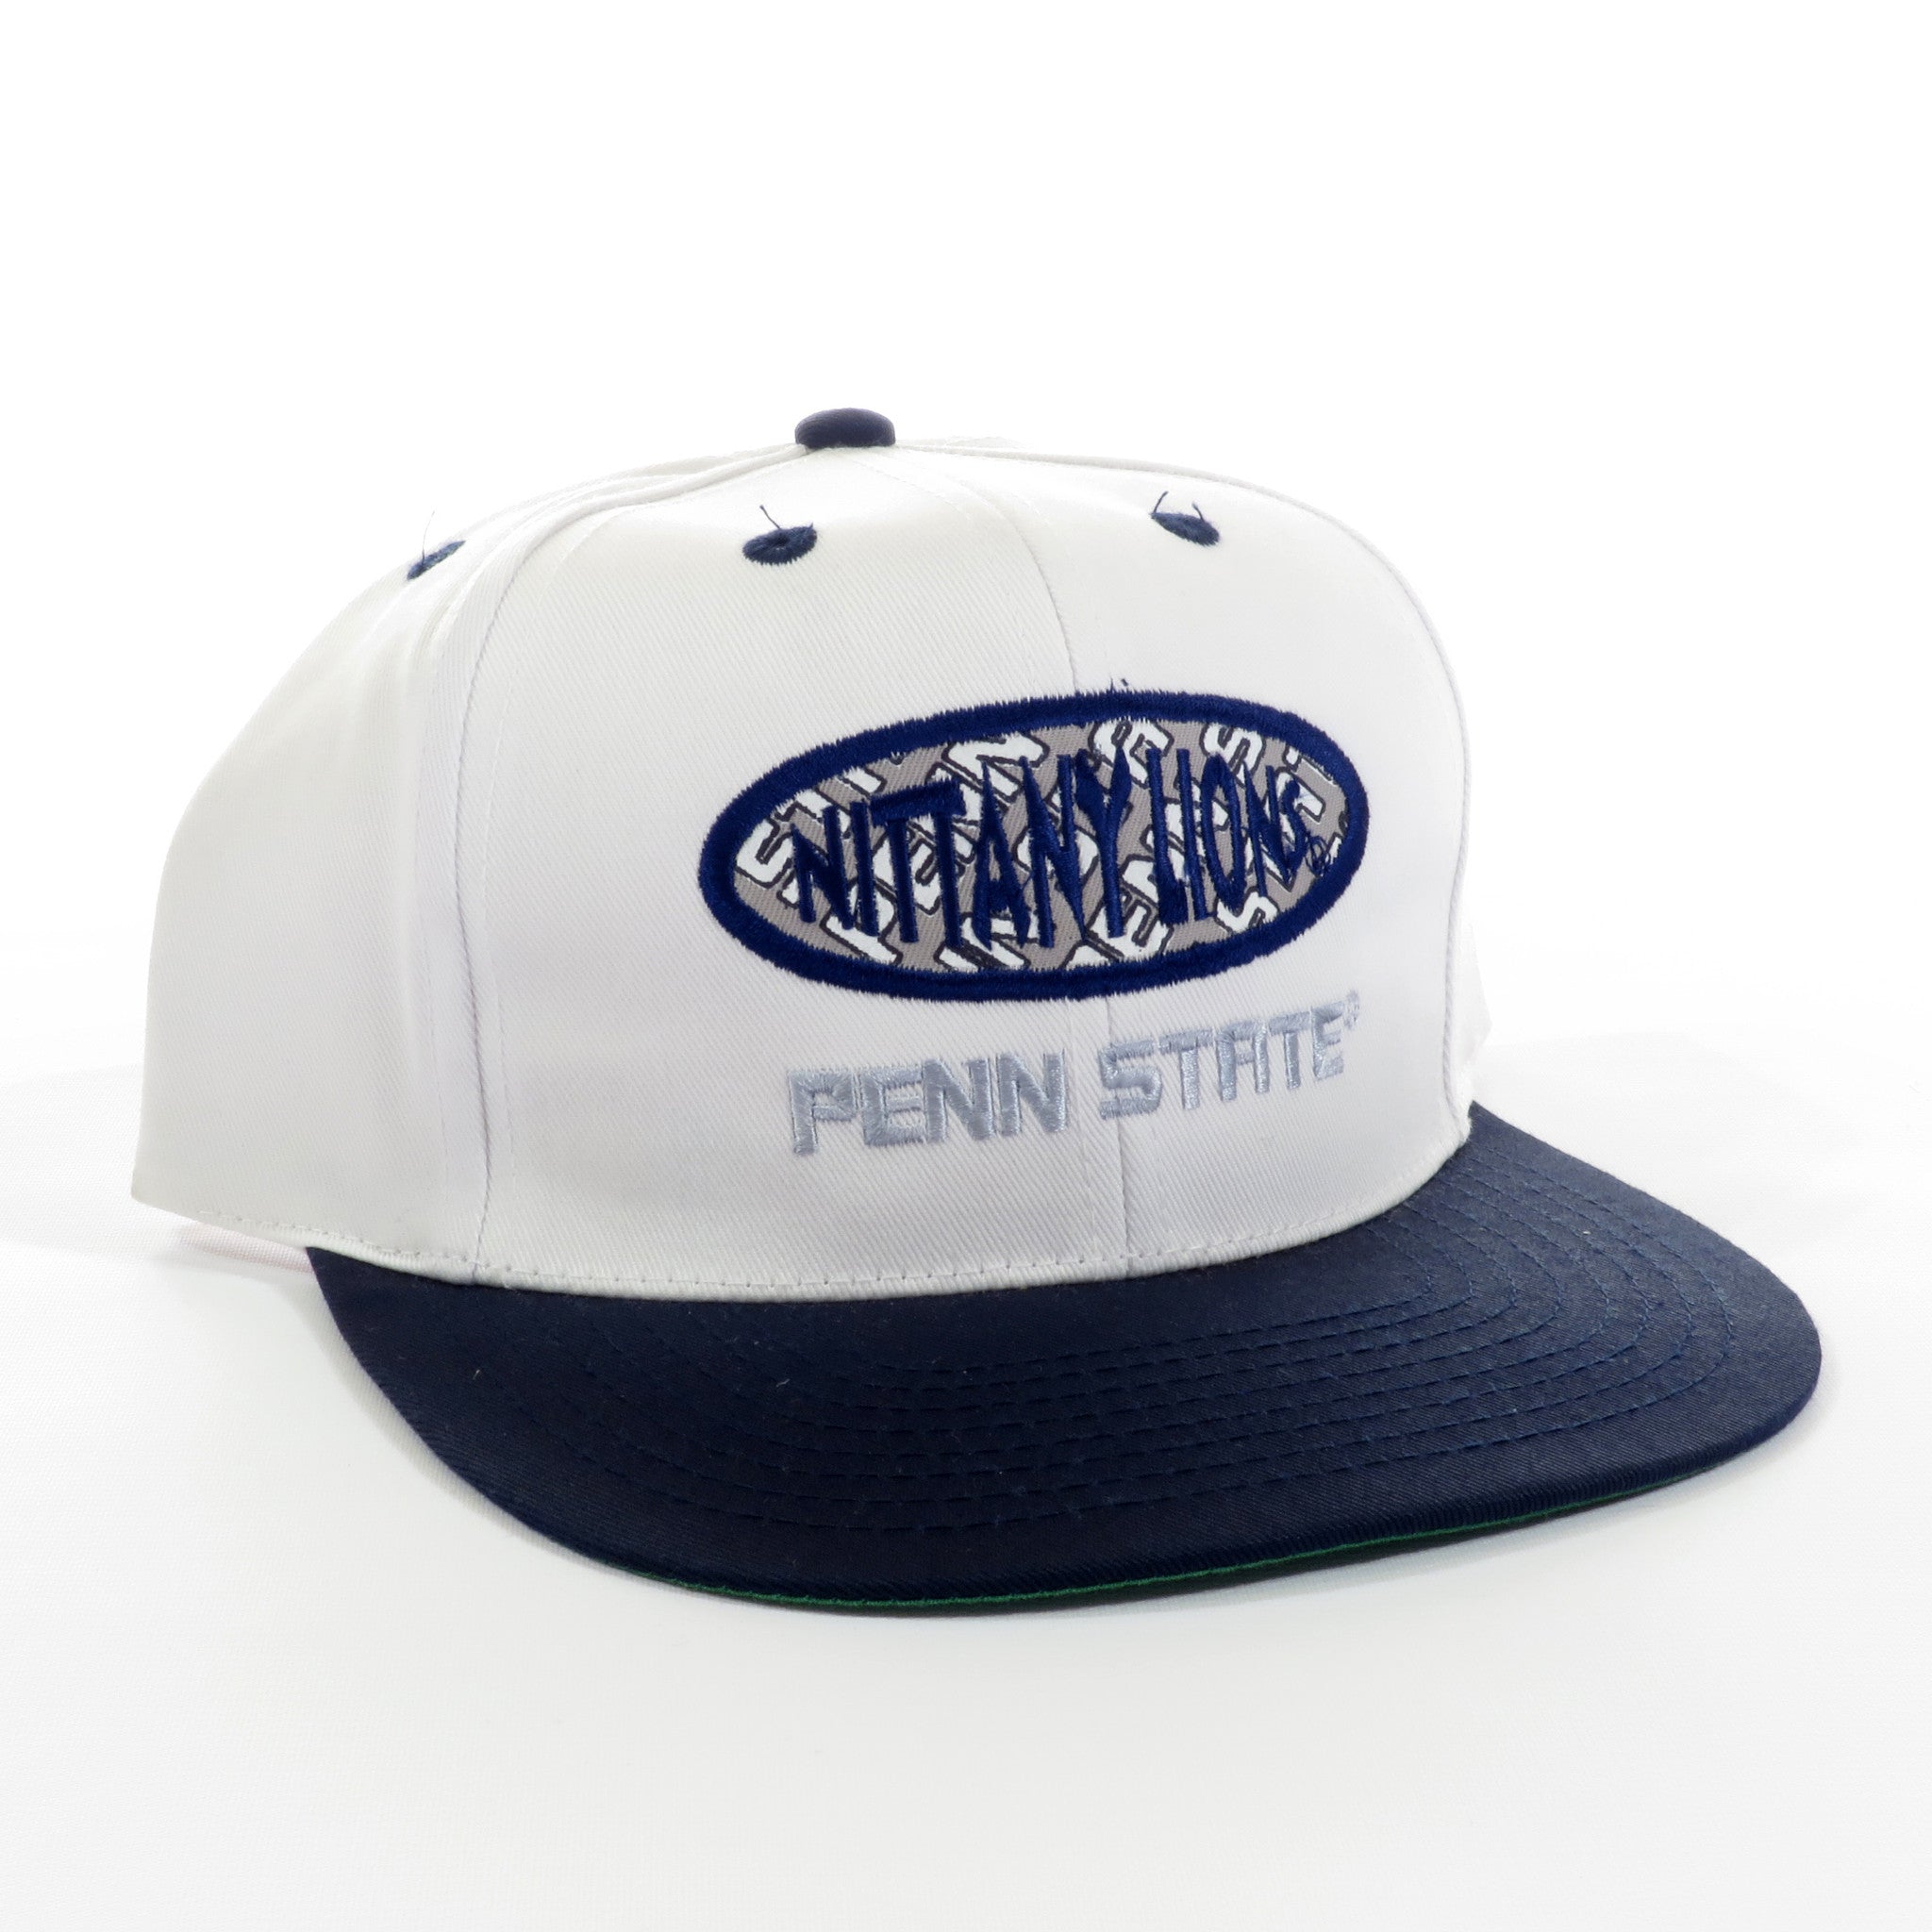 Penn State Nitany Lions Snapback Hat